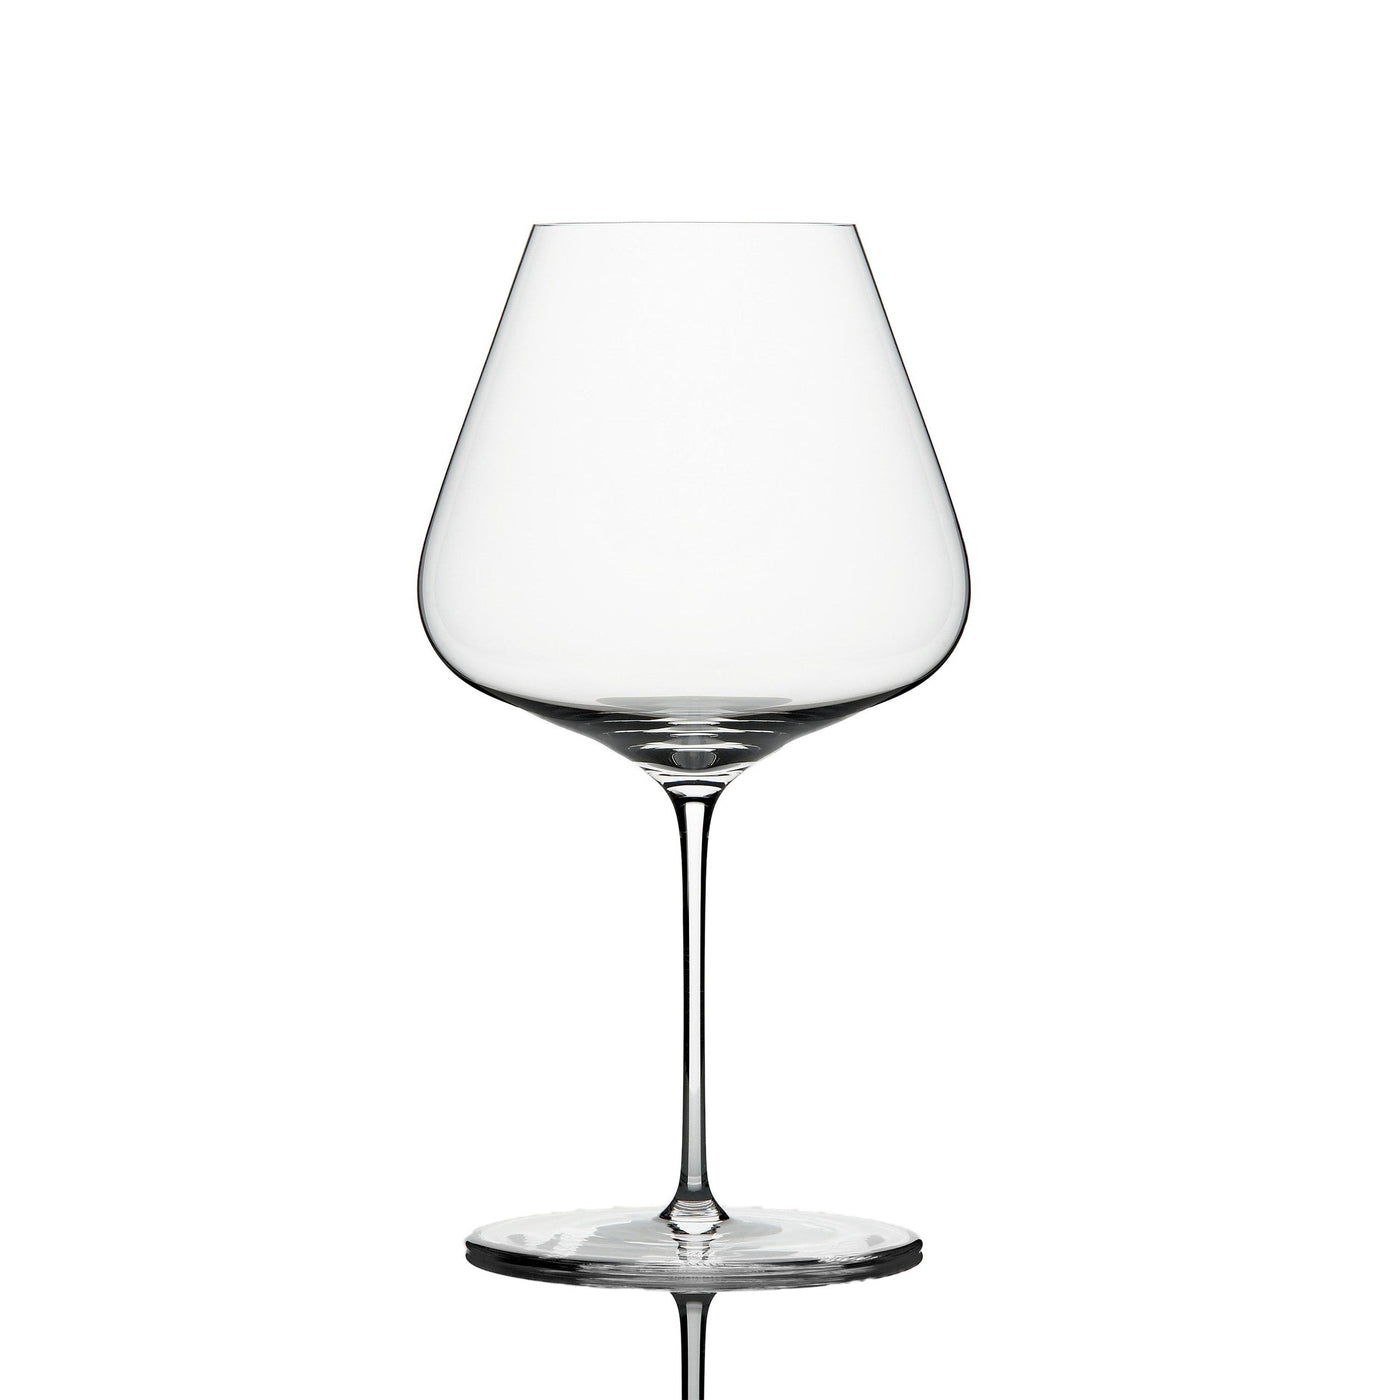 Zalto Denk Art Burgundy glass